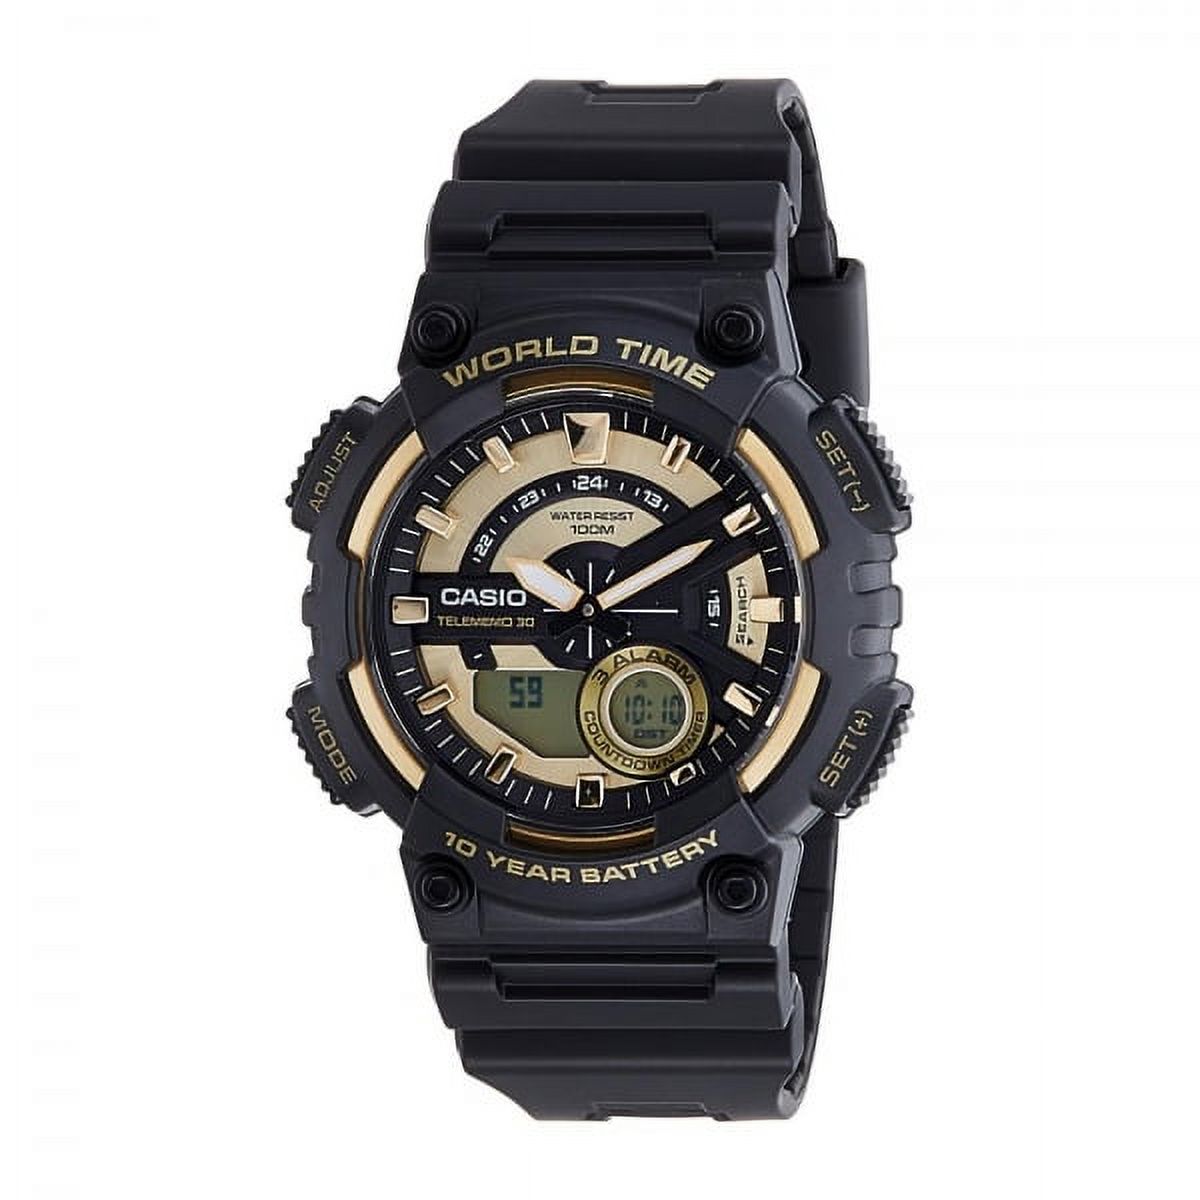 Men's Ana-Digi Watch, Black/Gold, AEQ110BW-9AVCF - image 1 of 4